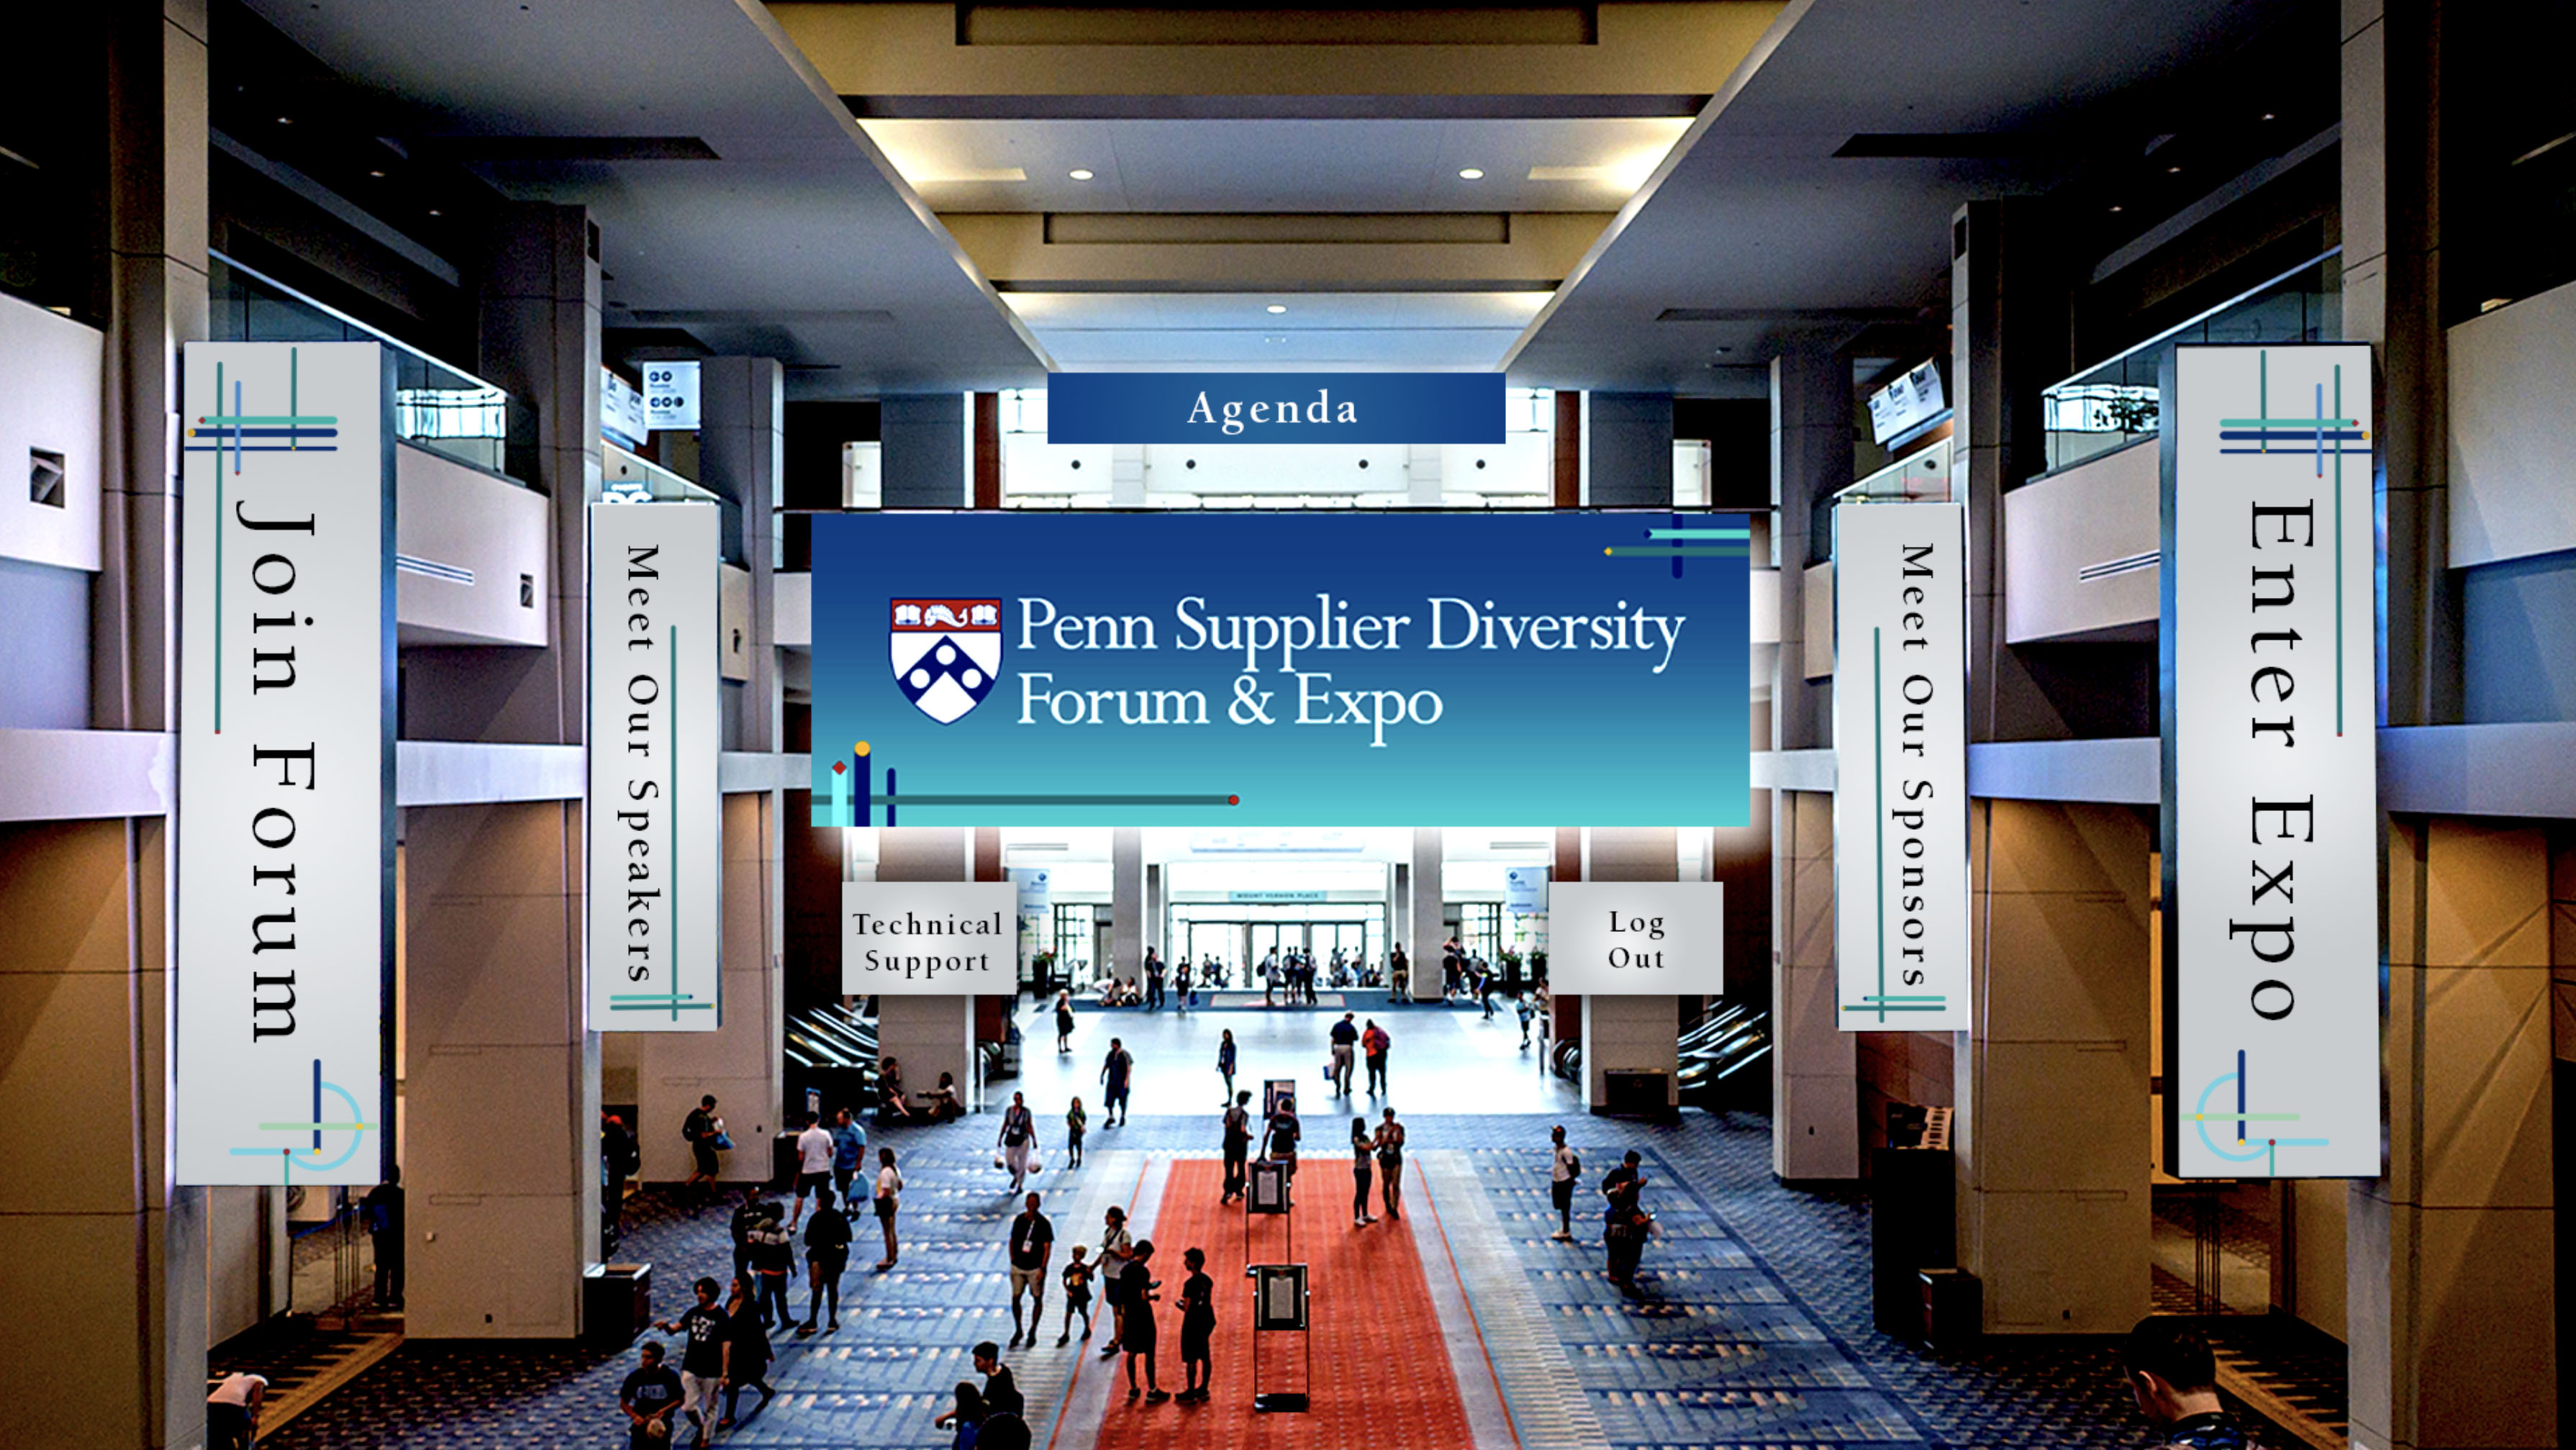 Penn Supplier Diversity Forum & Expo virtual lobby